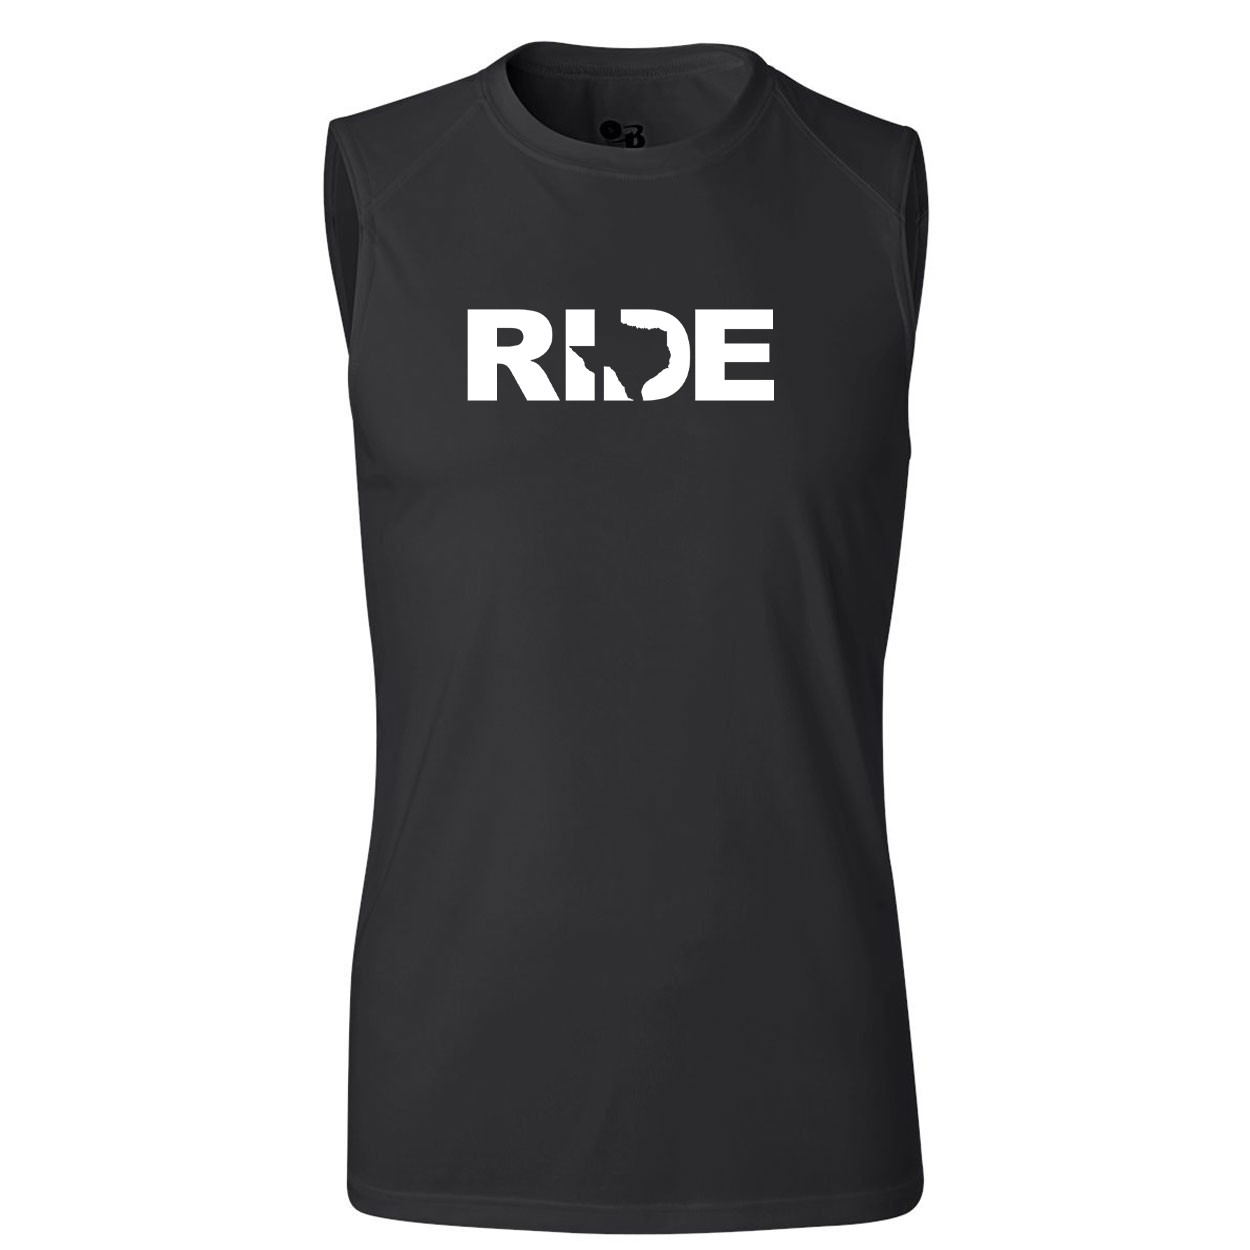 Ride Texas Classic Unisex Performance Sleeveless T-Shirt Black (White Logo)